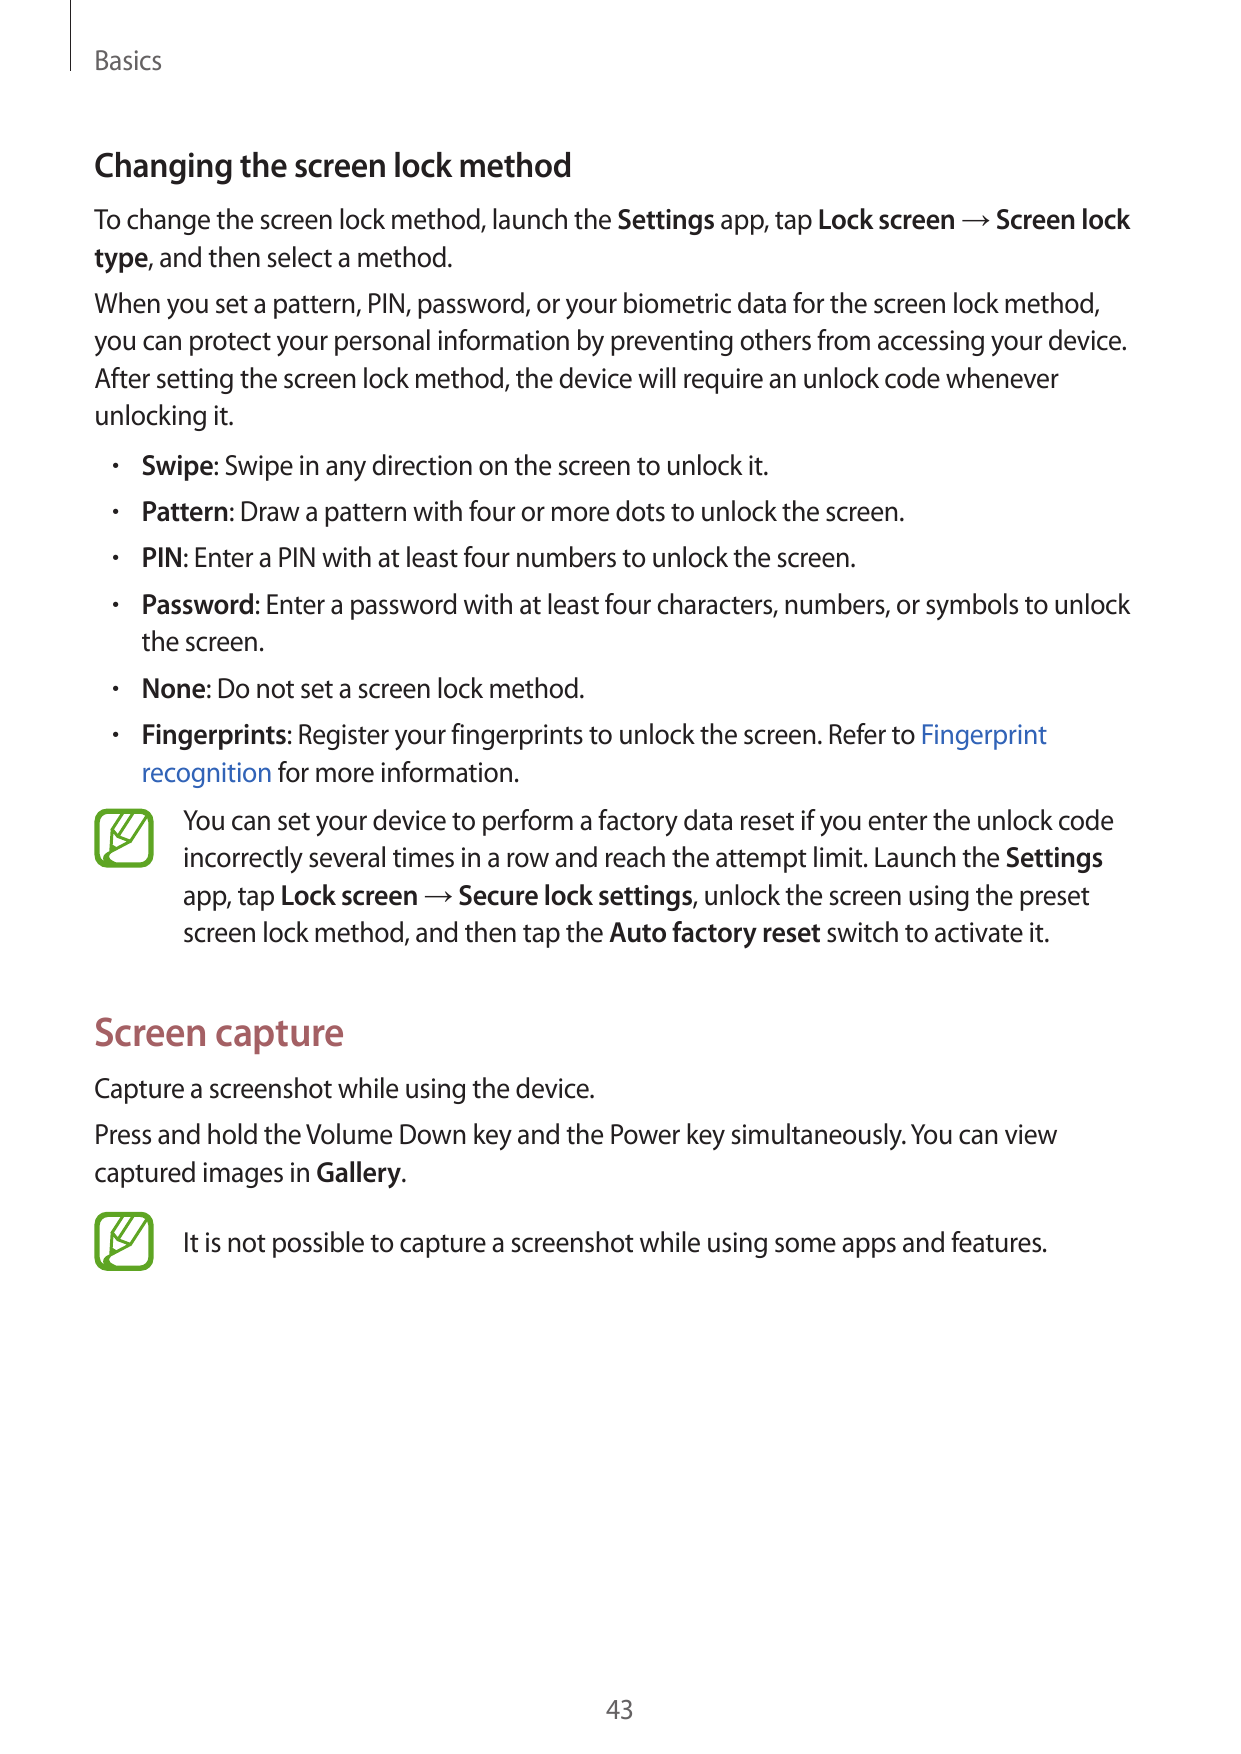 BasicsChanging the screen lock methodTo change the screen lock method, launch the Settings app, tap Lock screen → Screen locktyp